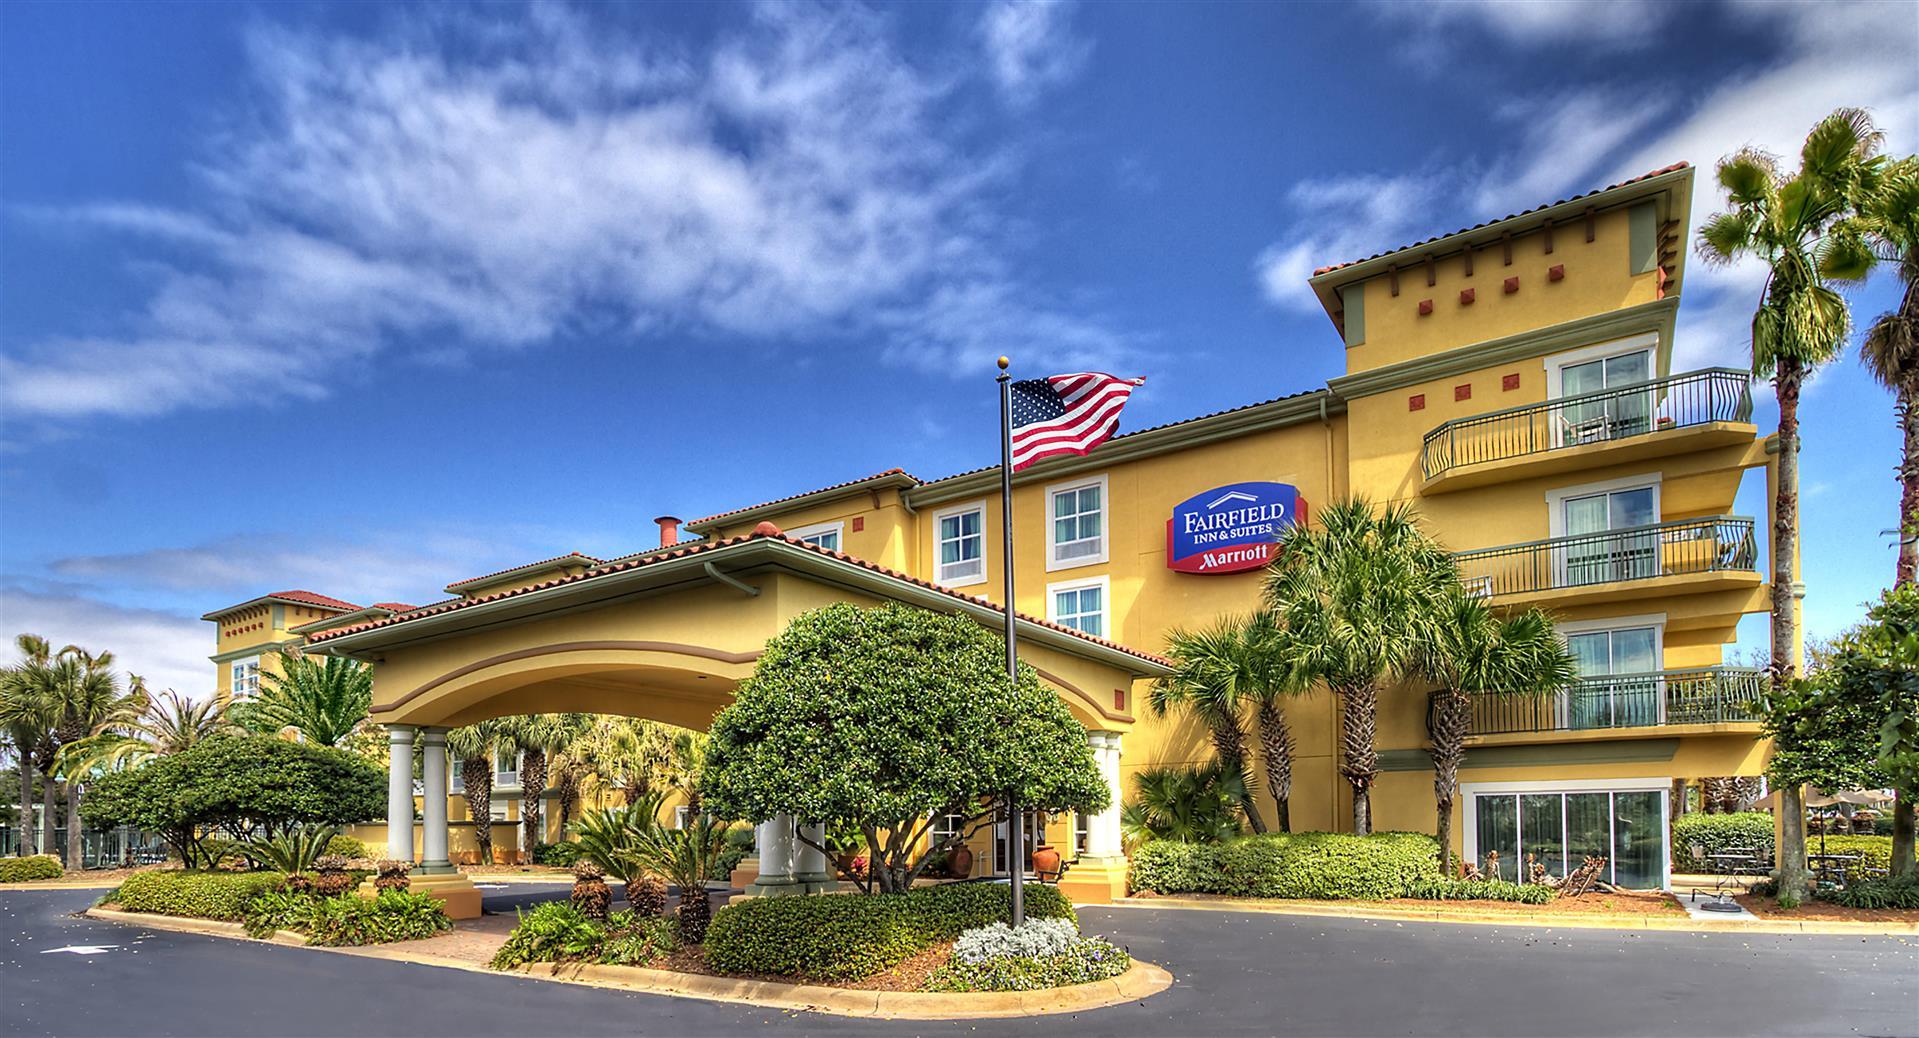 Fairfield Inn & Suites Destin in Destin, FL